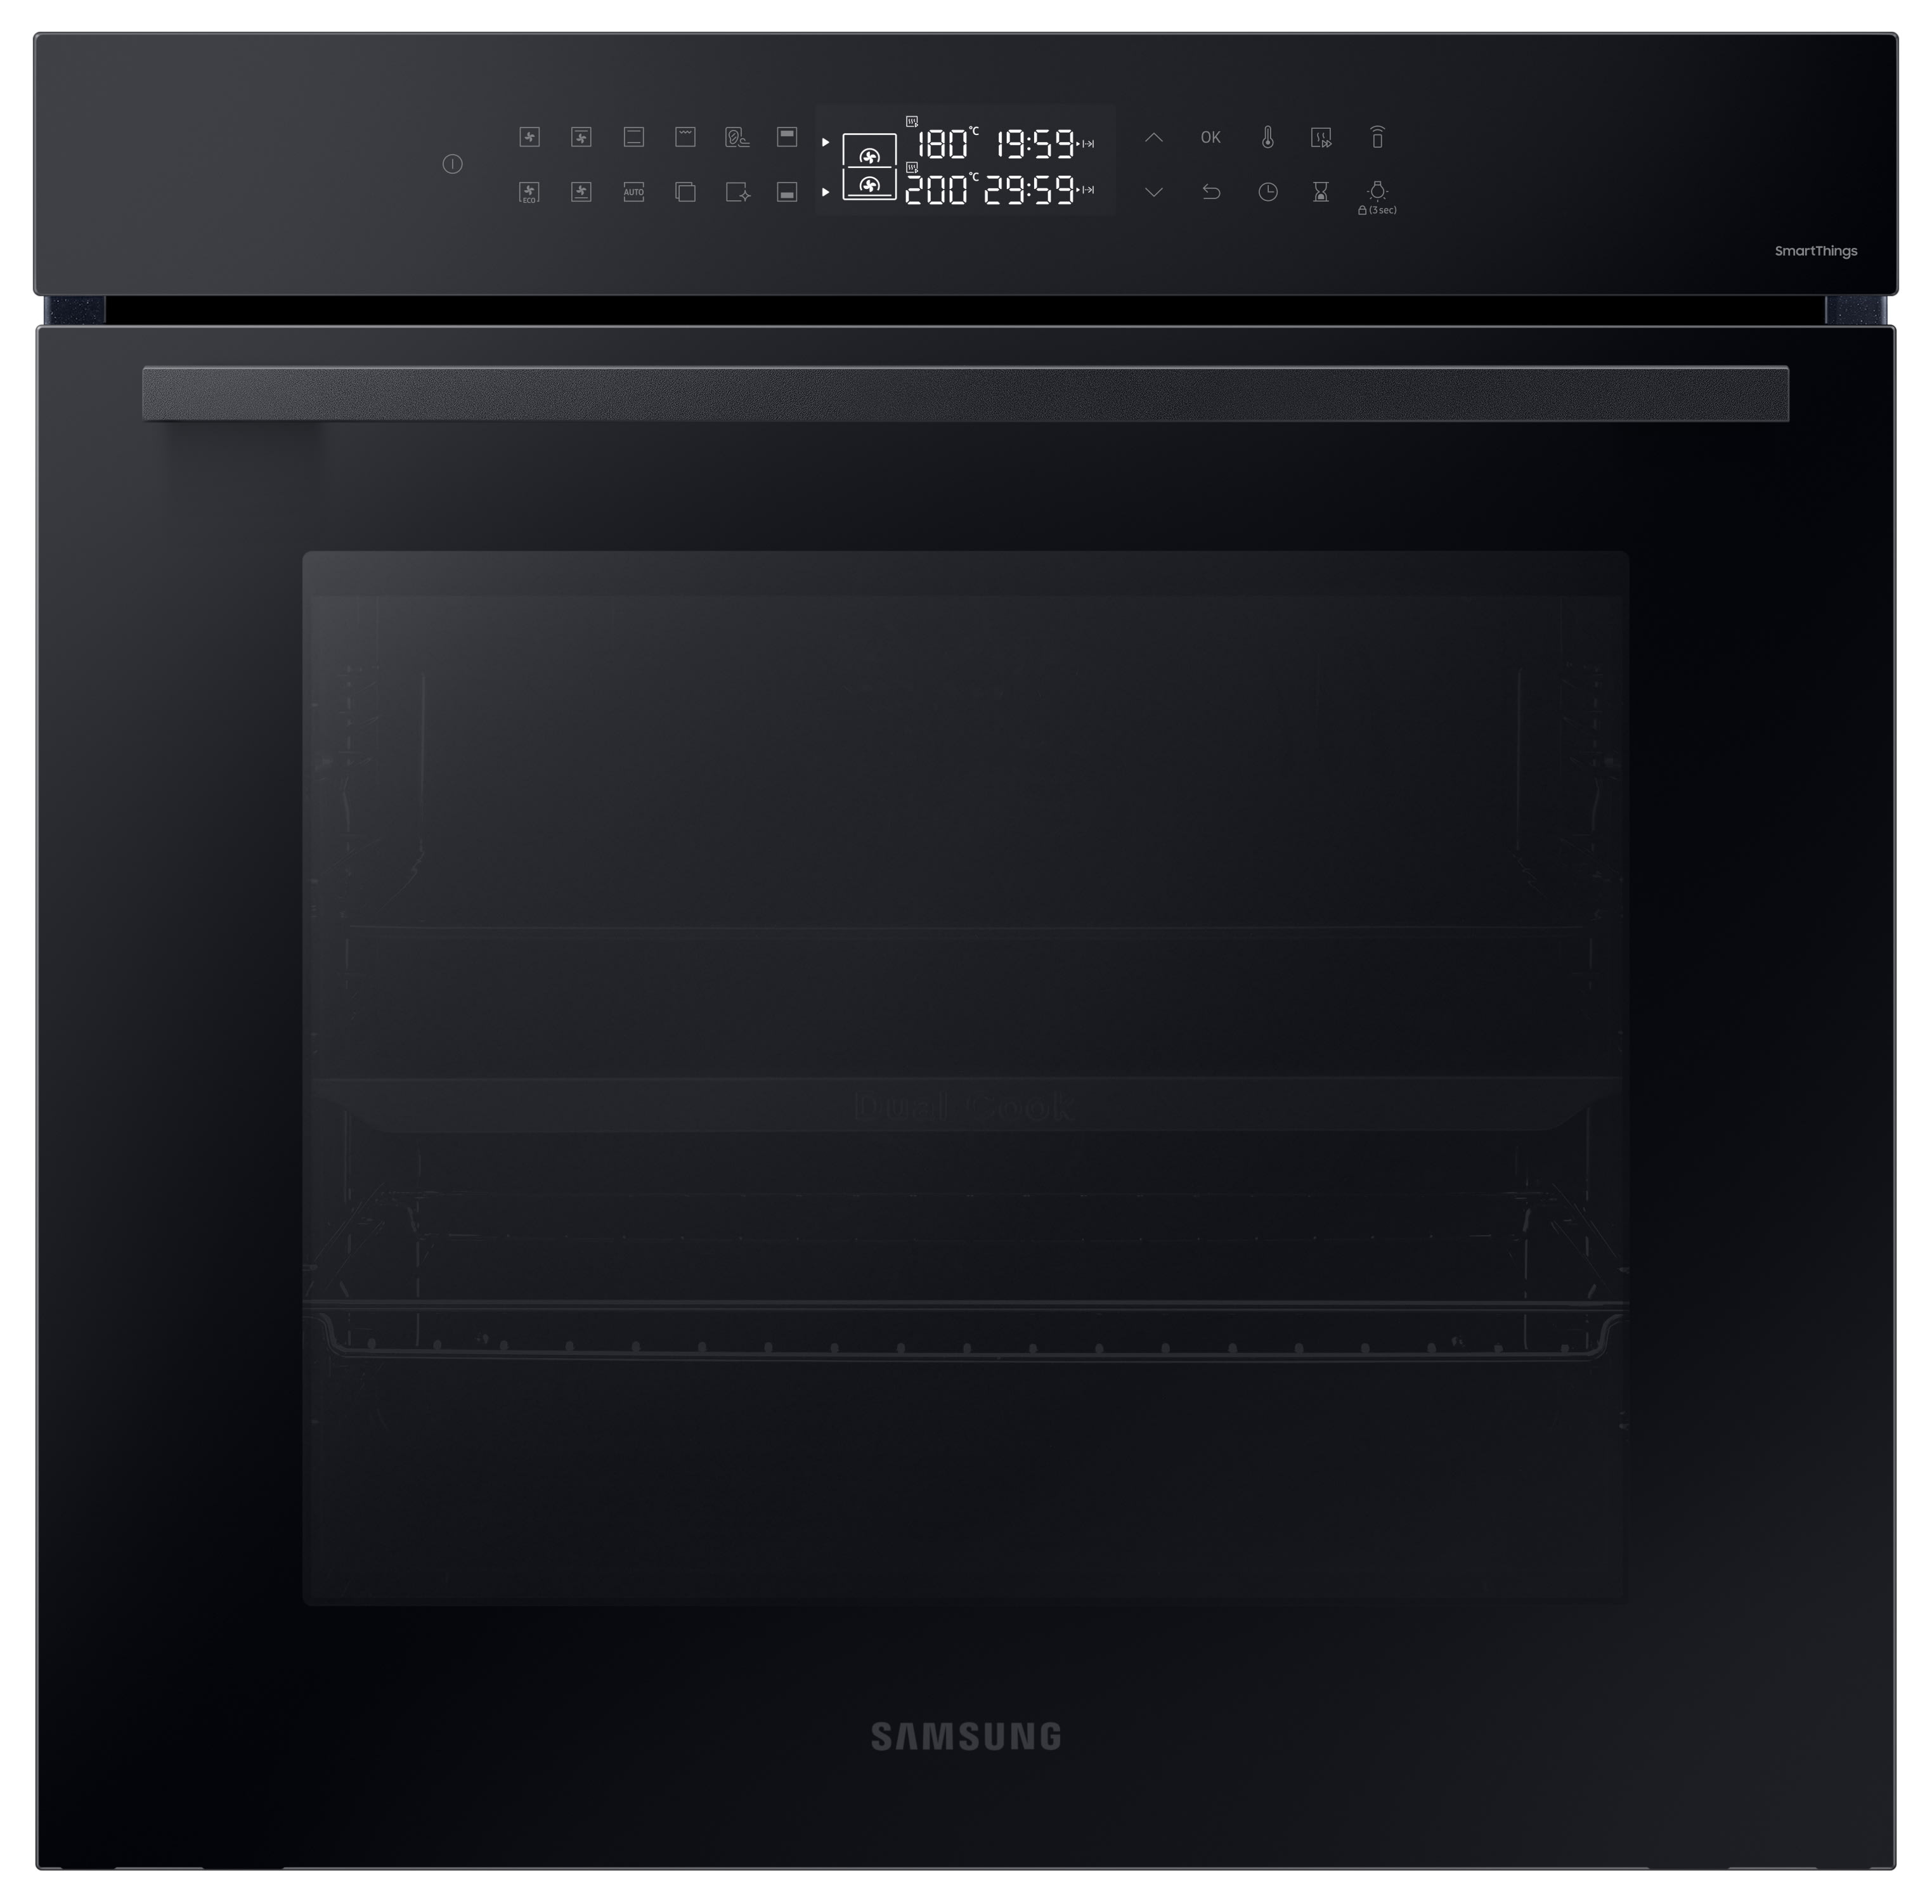 Samsung NV7B42503AK/U4 A+ Series 4 Dual Cook Smart